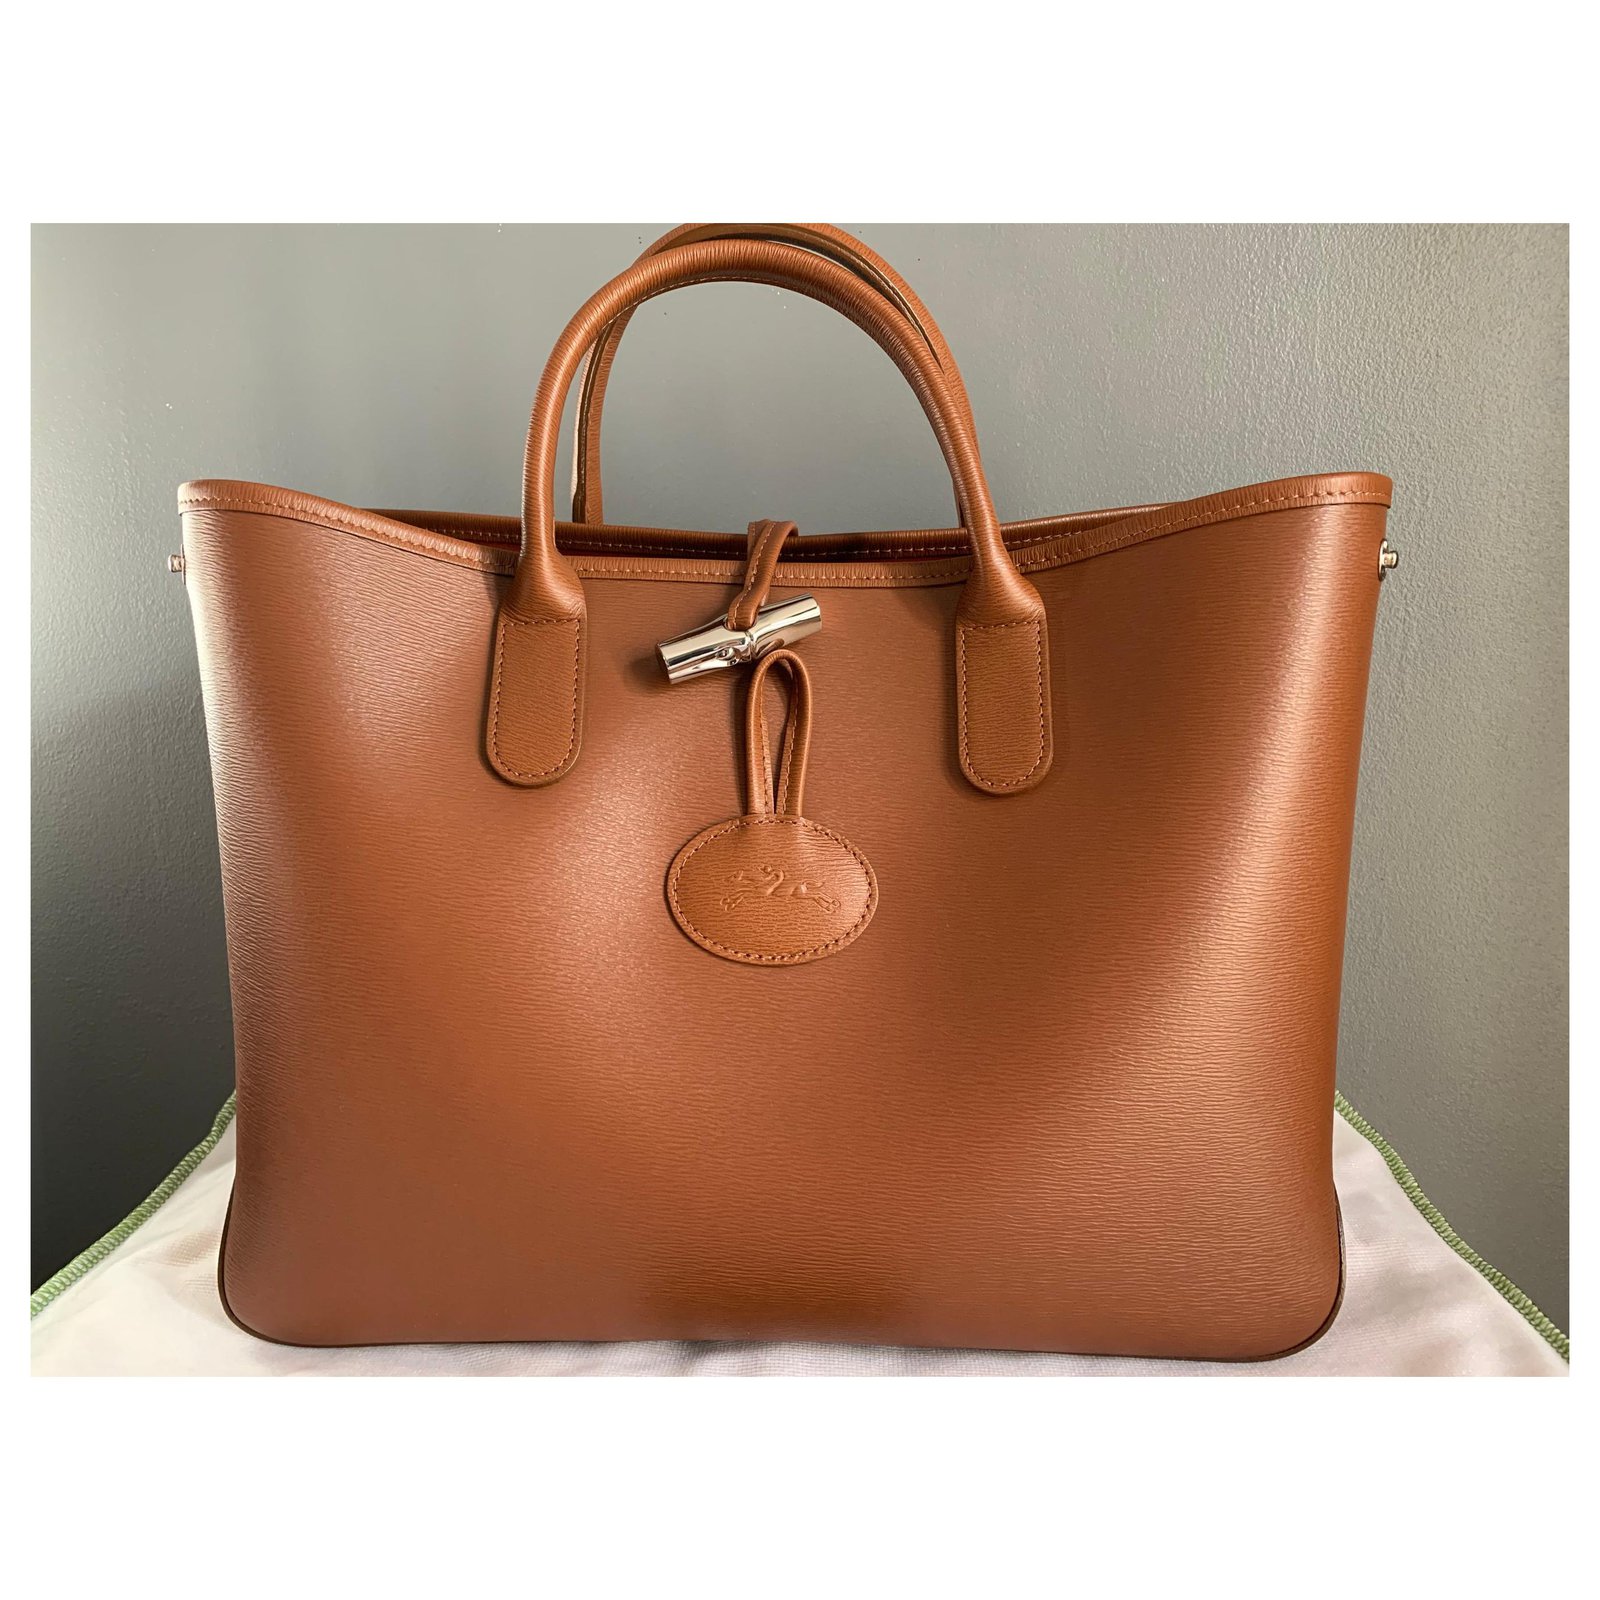 Longchamp Roseau S handbag in camel